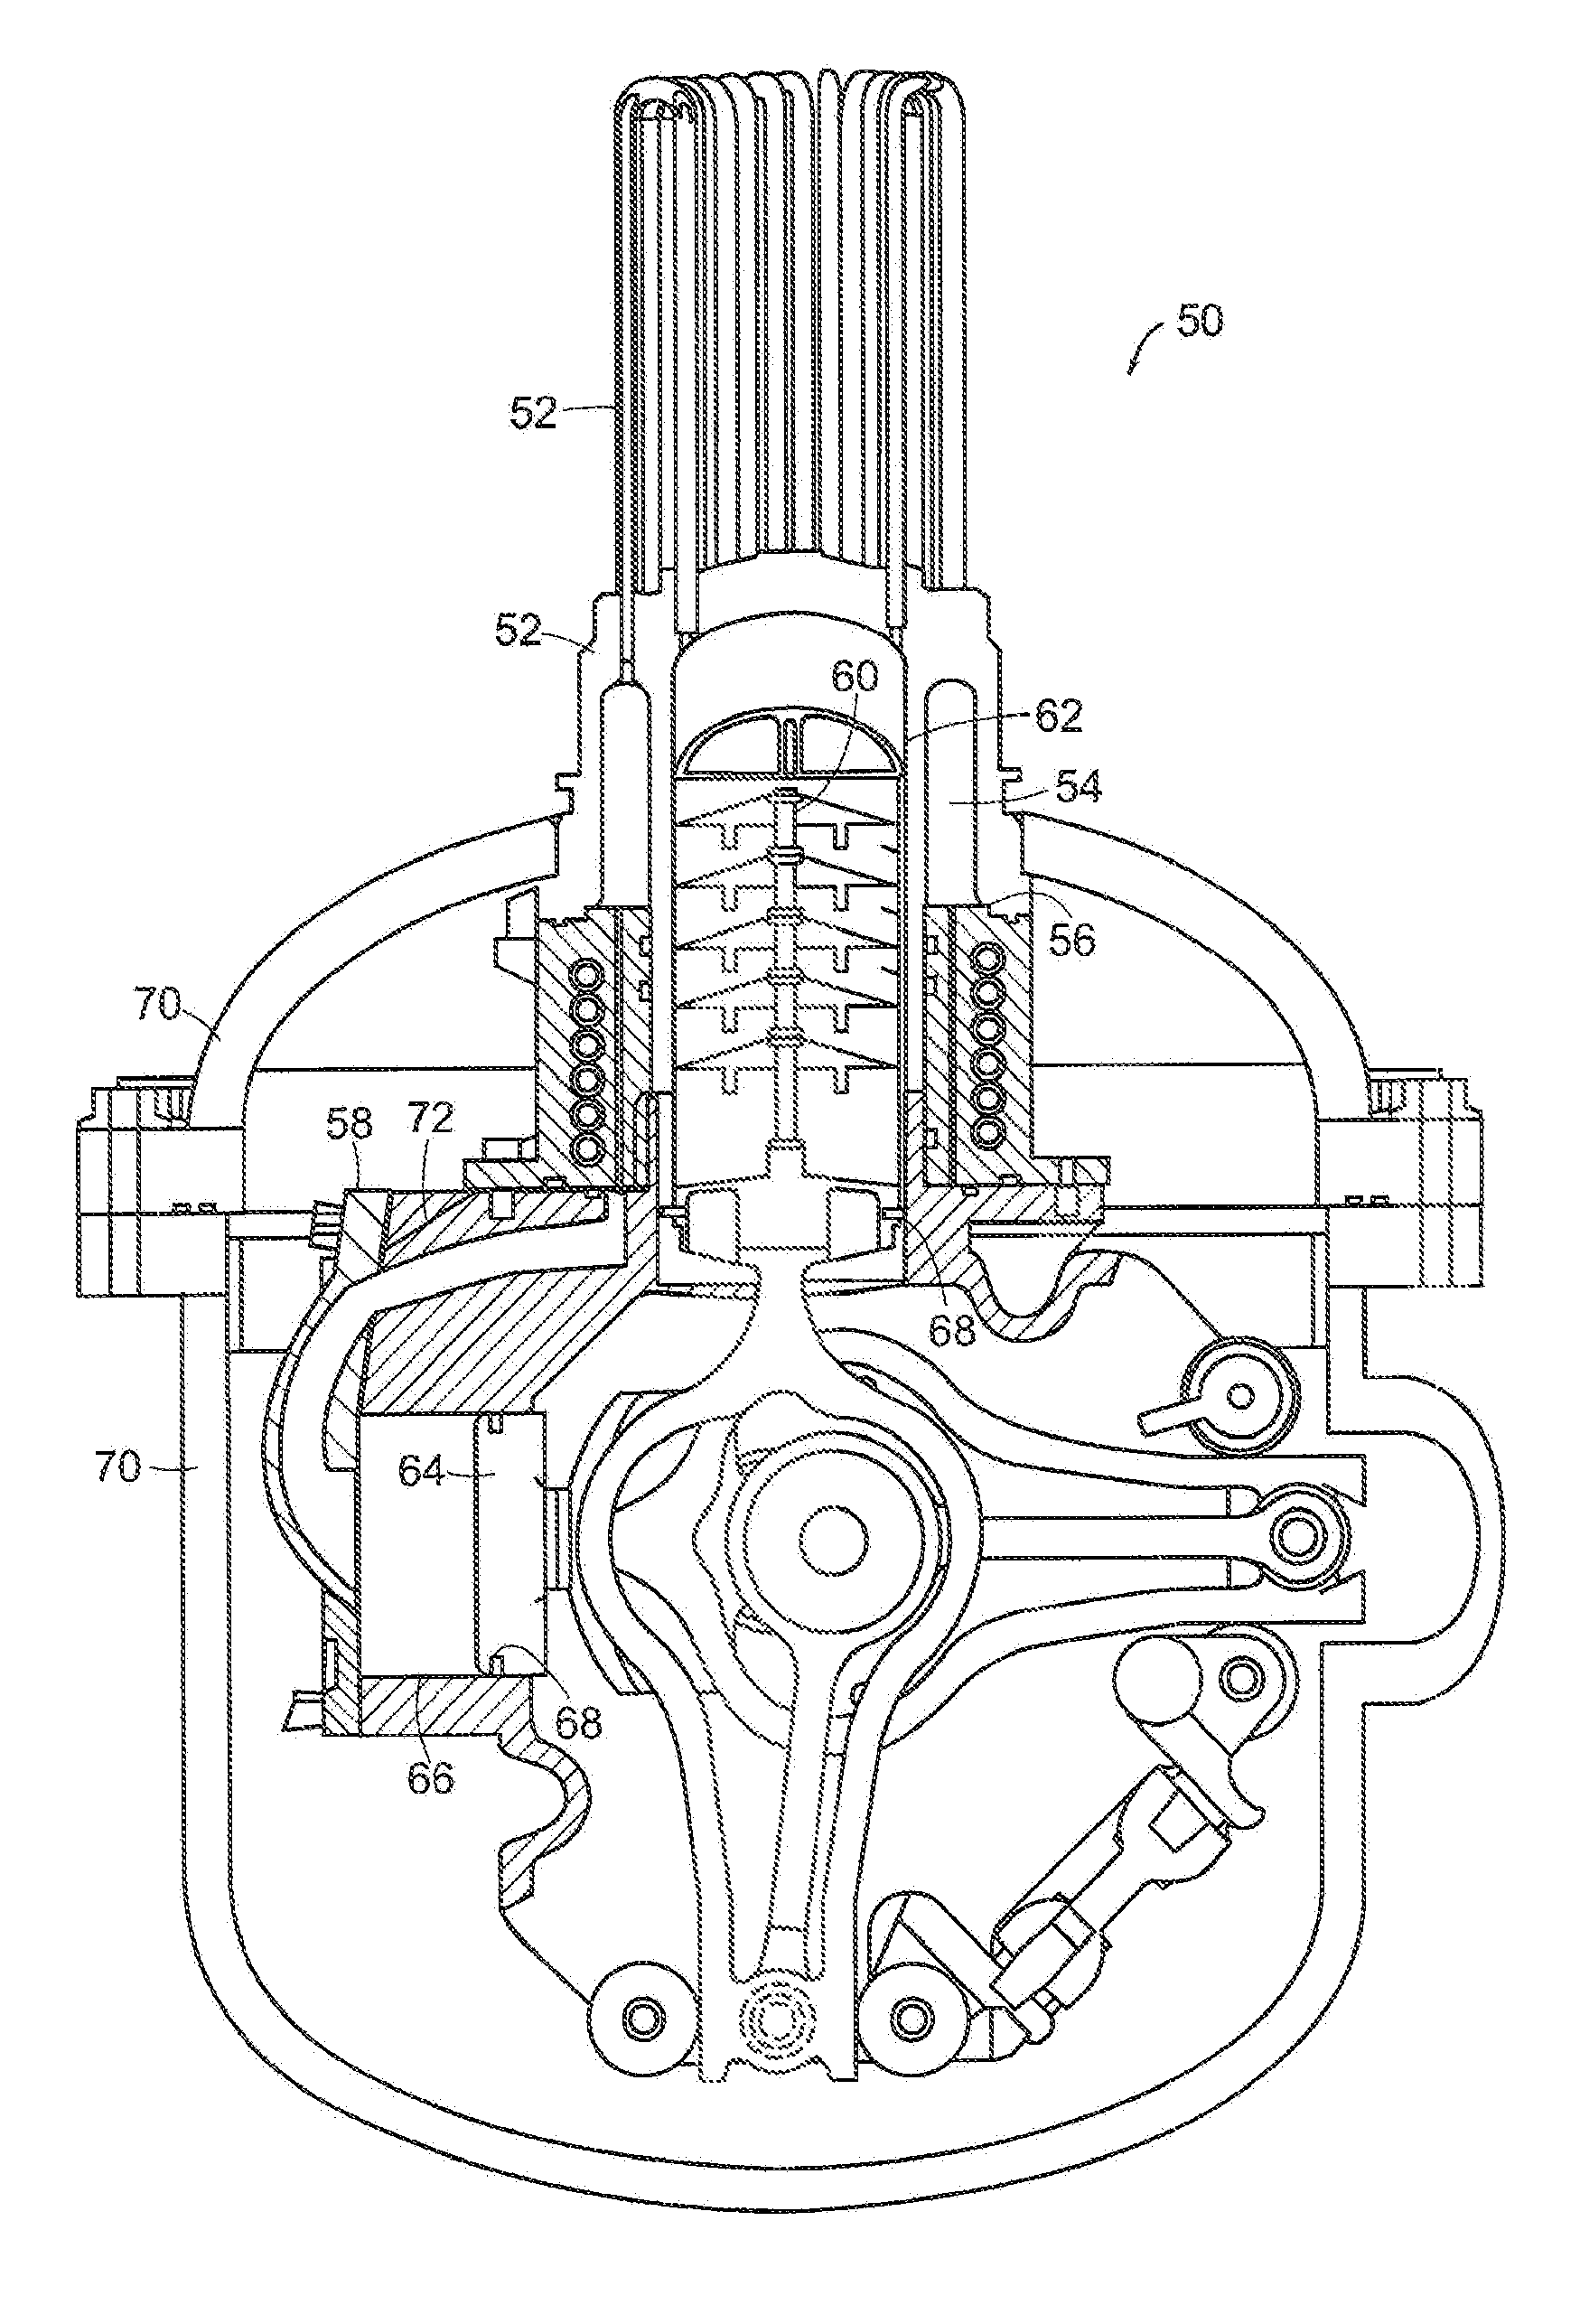 Coolant penetrating cold-end pressure vessel